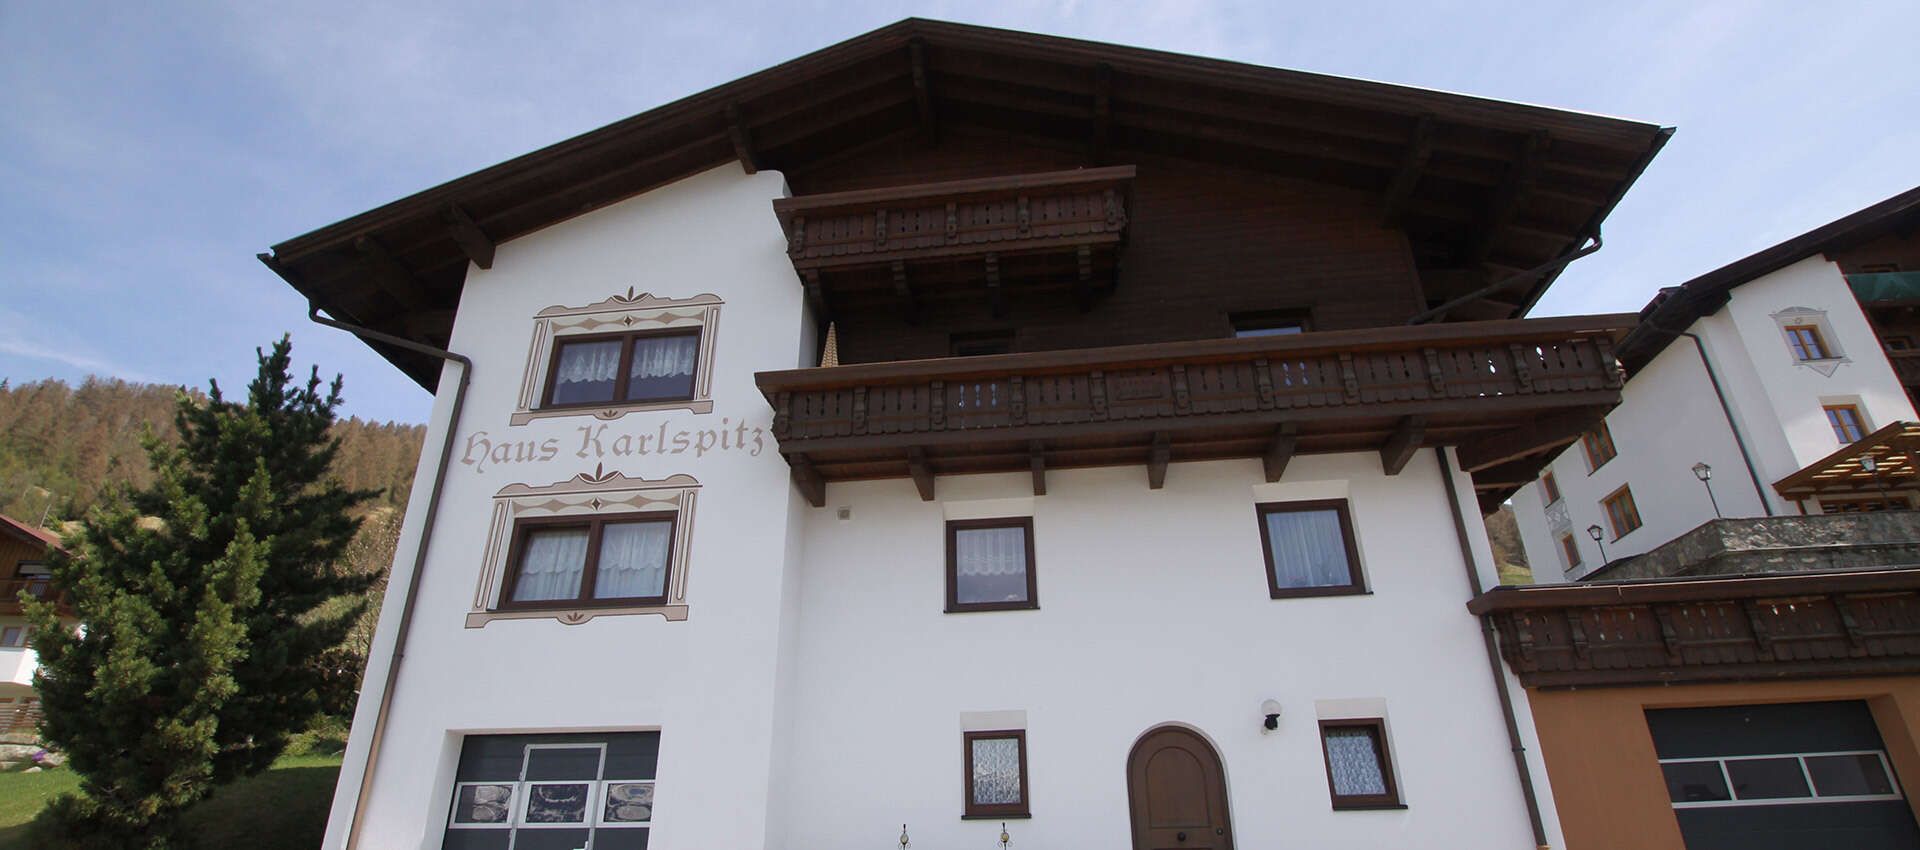 Haus Karlspitz in Fendels im Kaunertal Tirol